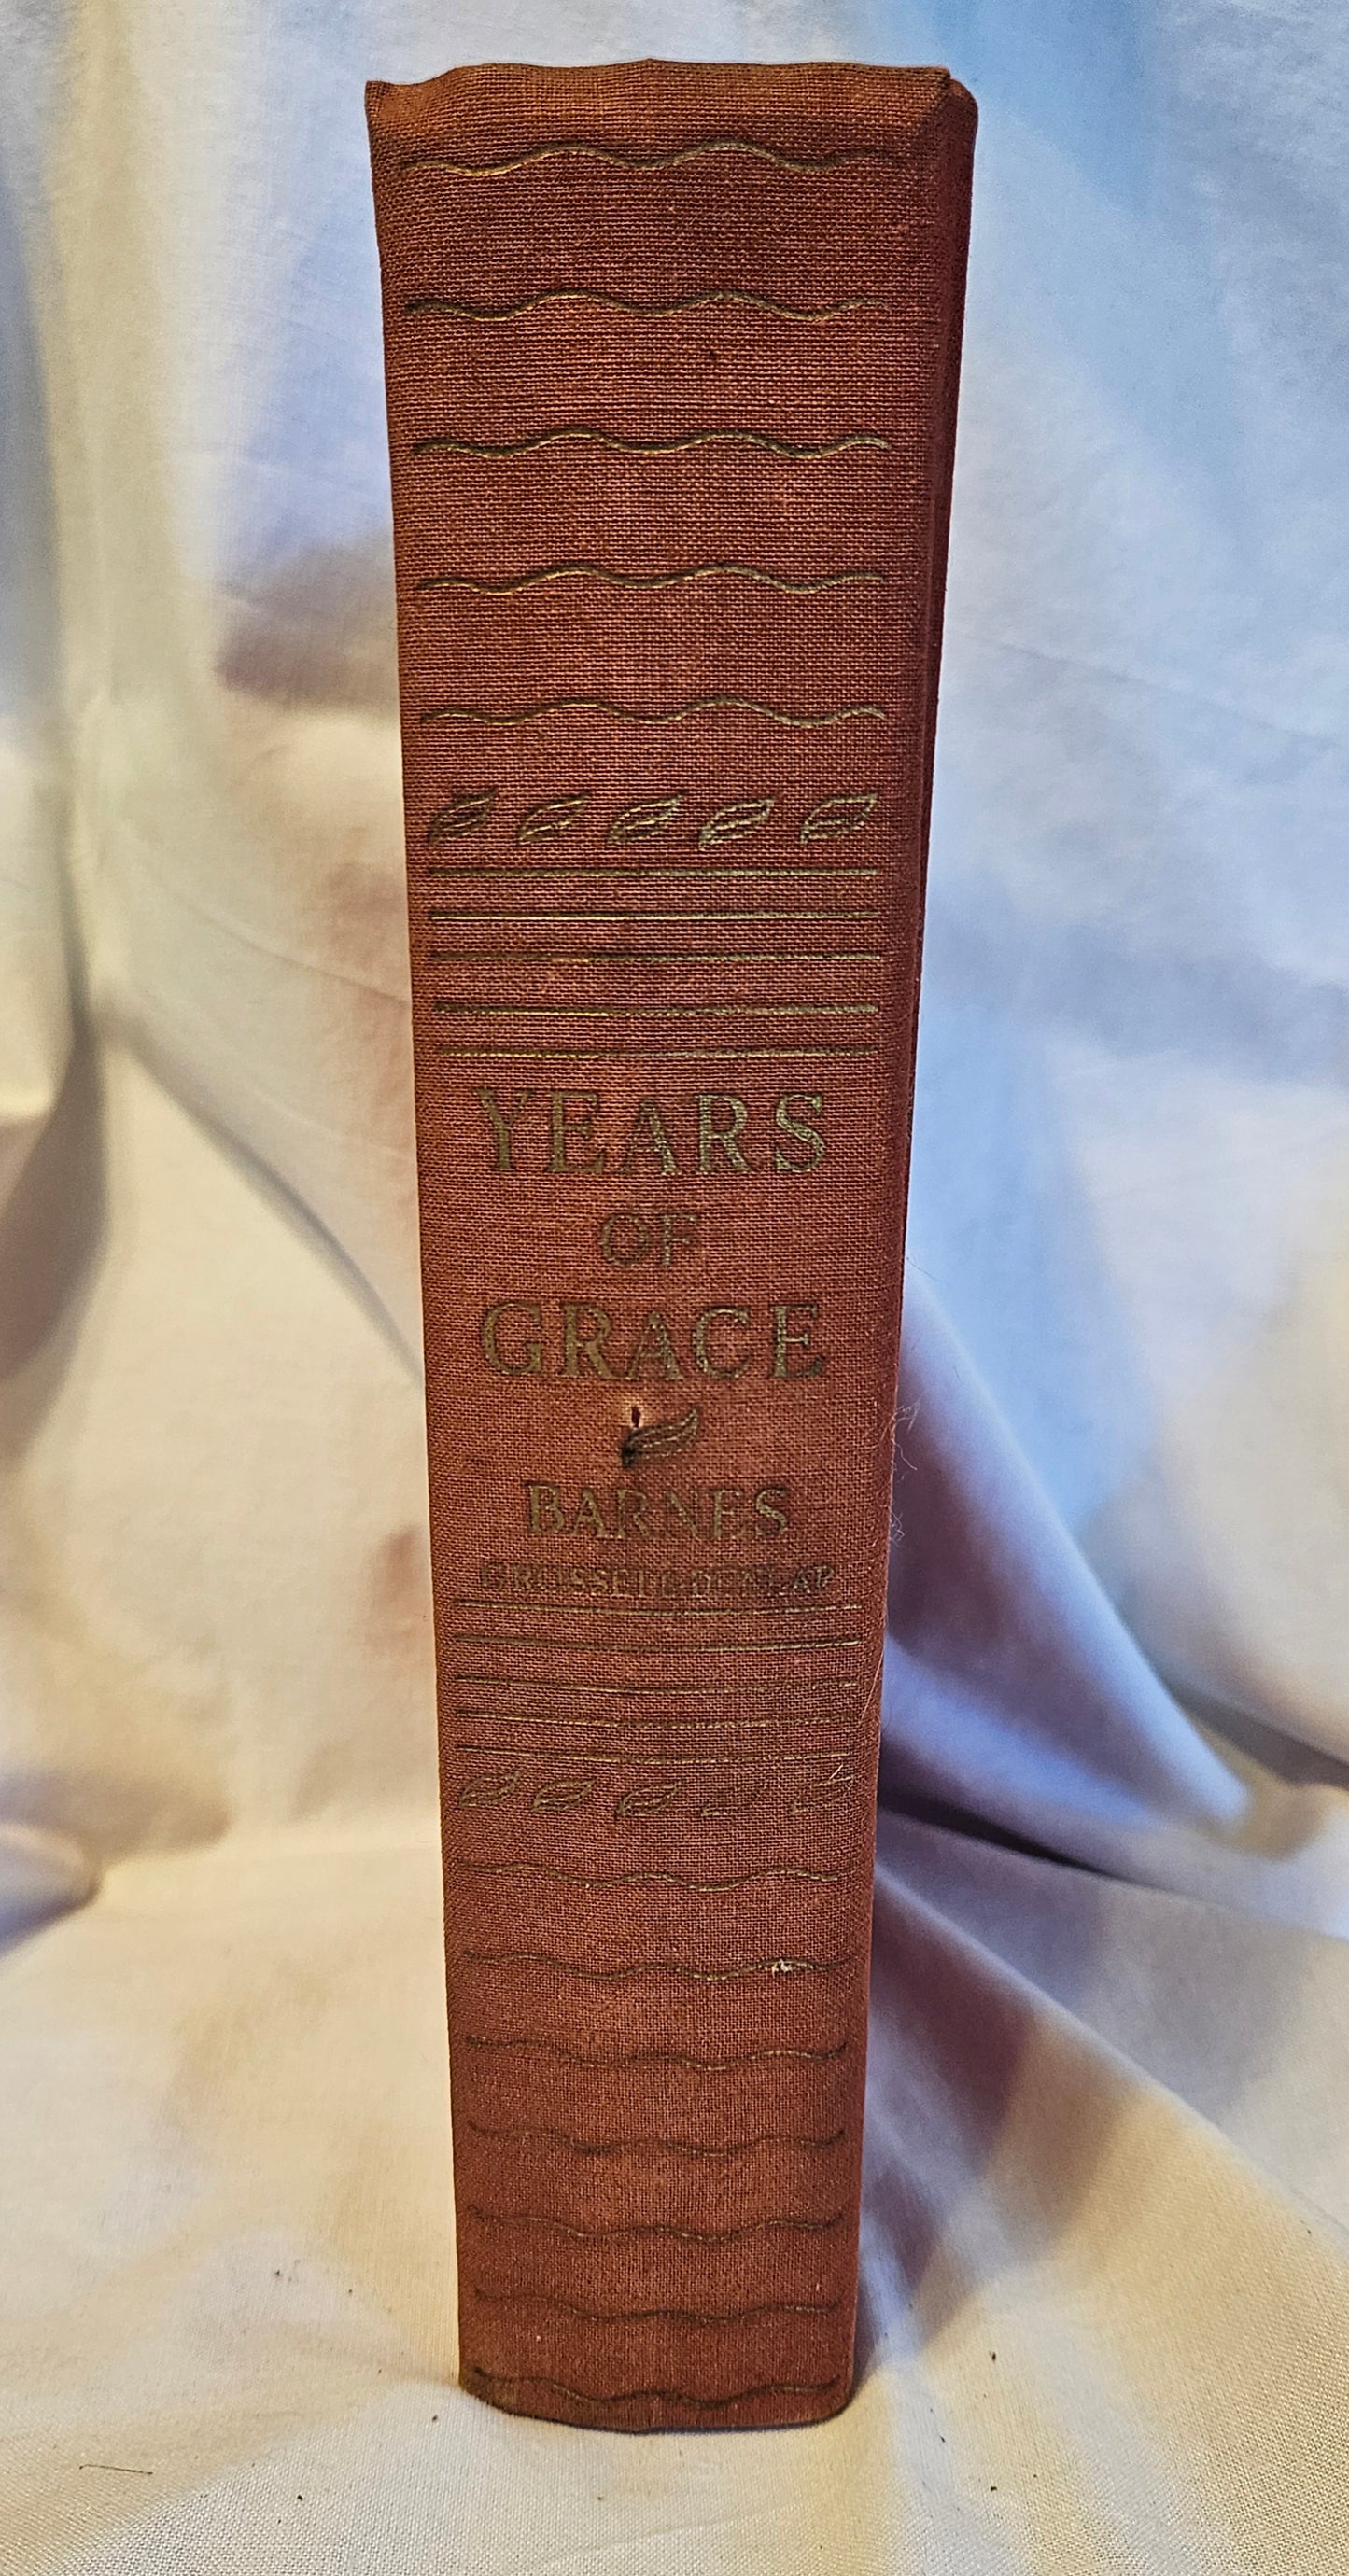 Years of Grace (1930) - Barnes' Pulitzer Prize Winning Novel